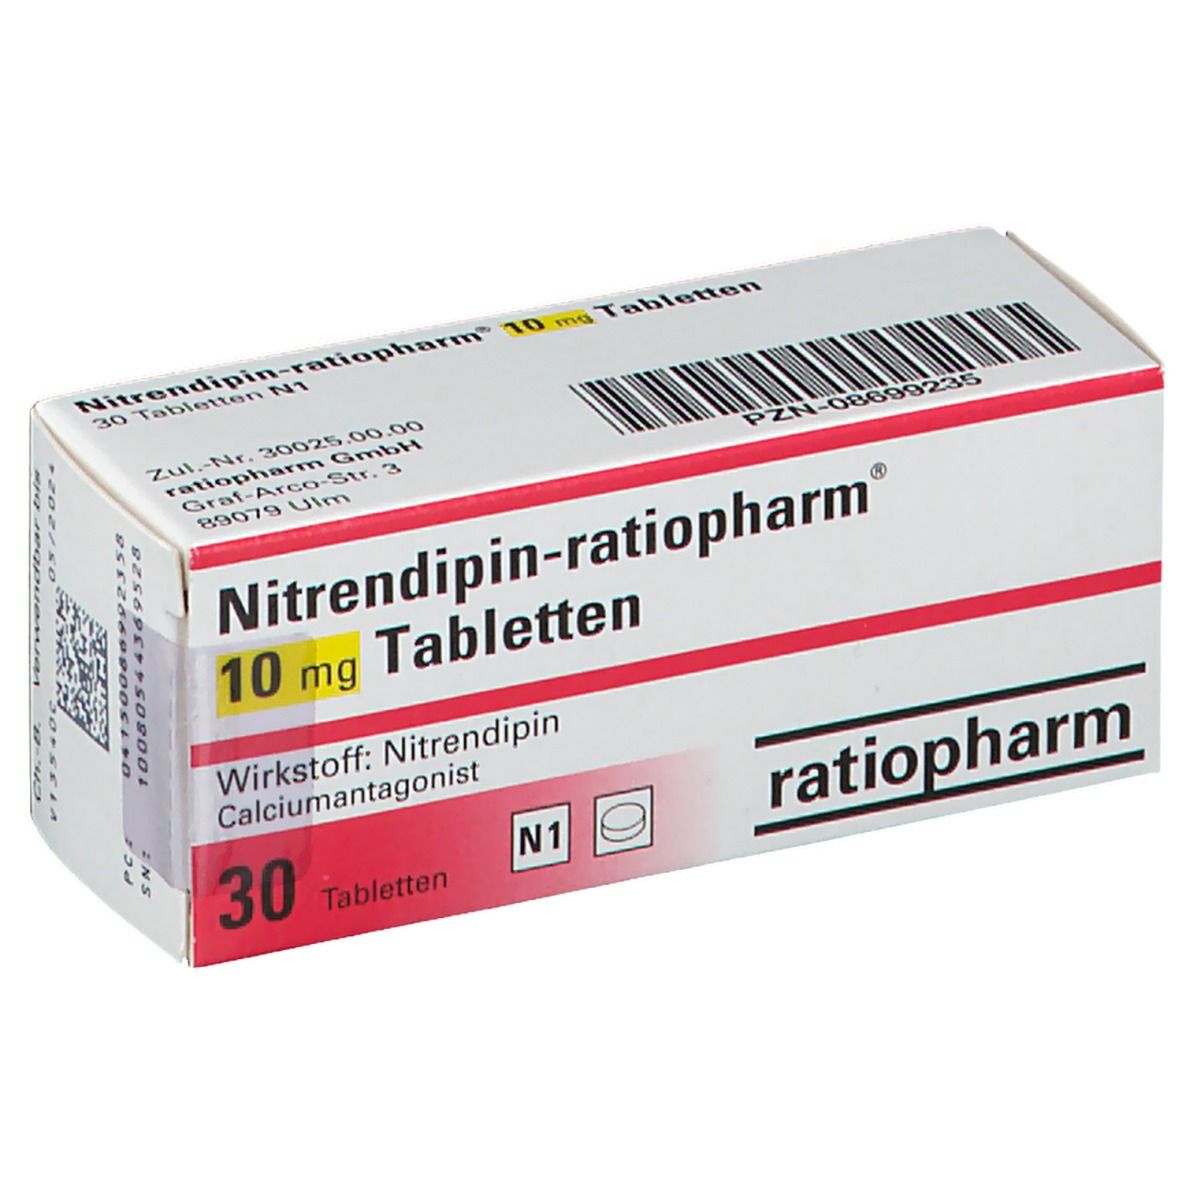 Nitrendipin-ratiopharm® 10 mg